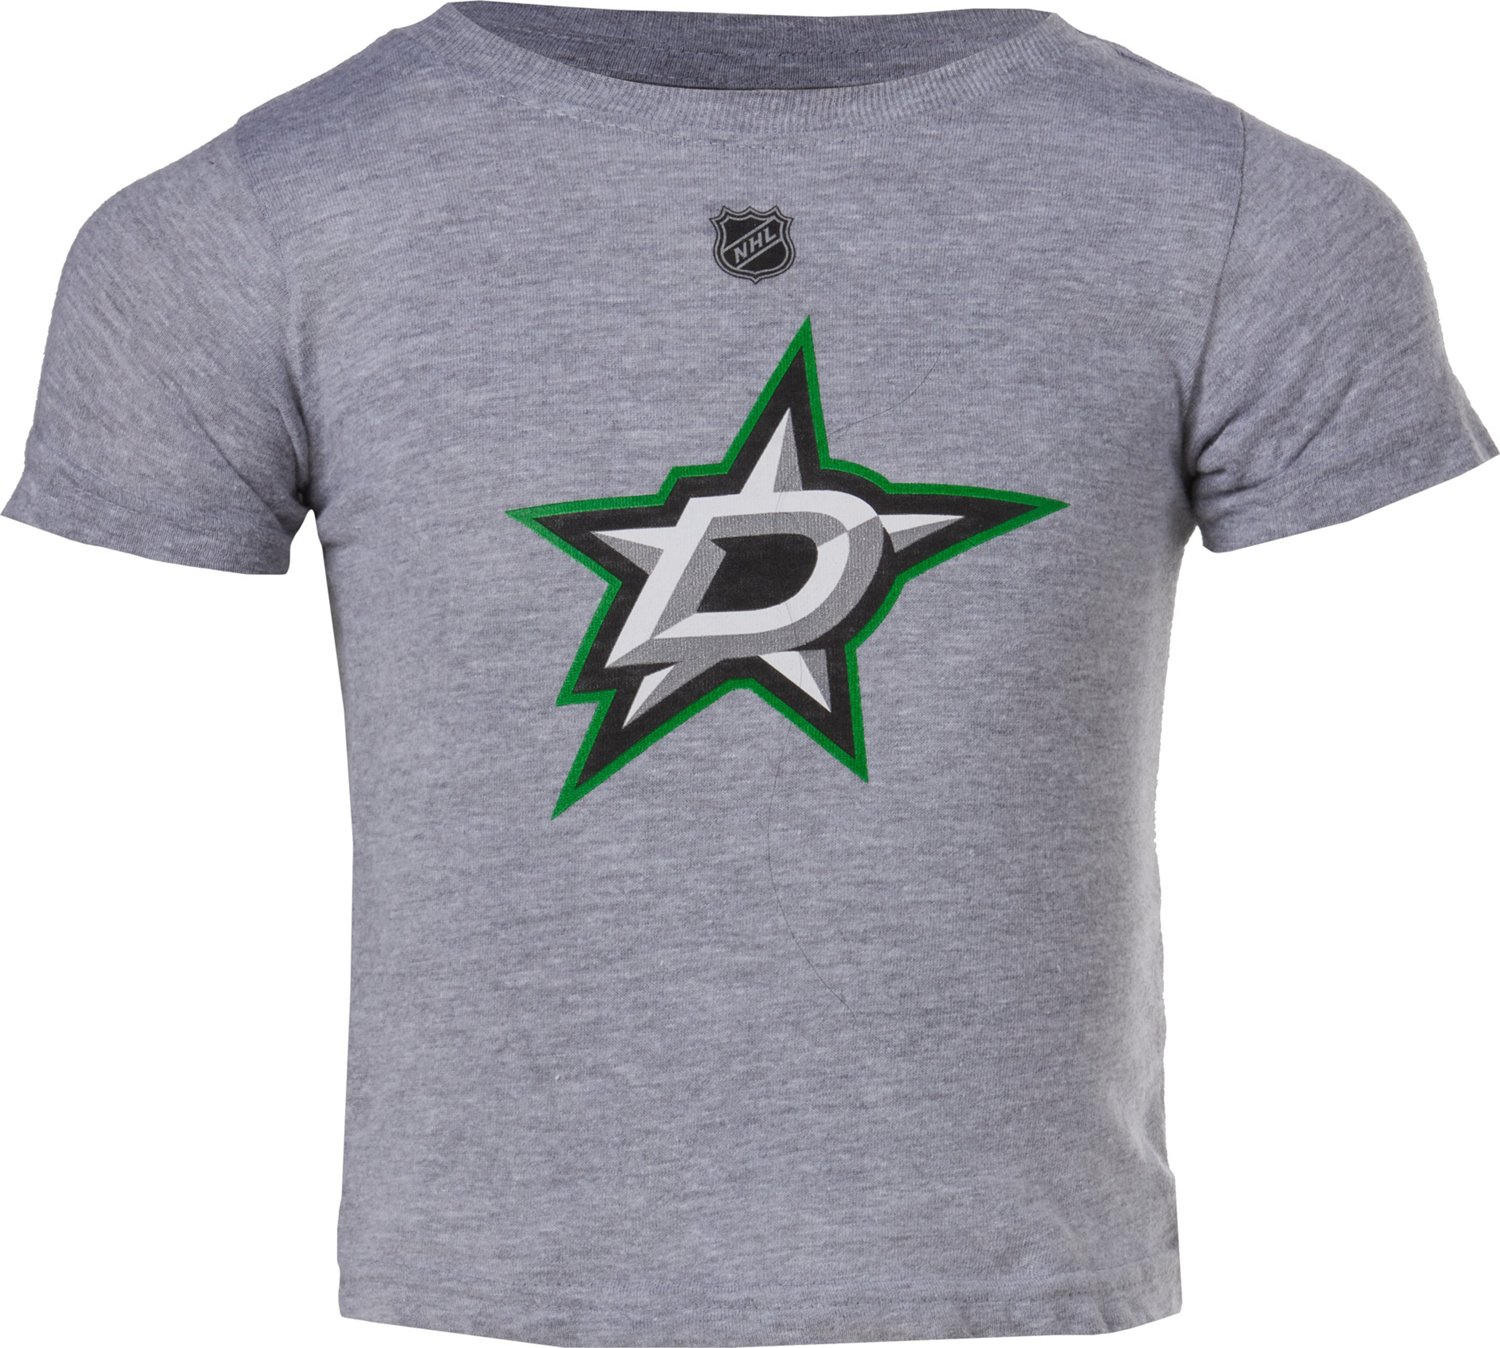 Dallas Stars Hockey Hawaiian Shirts, Shorts - EmonShop - Tagotee